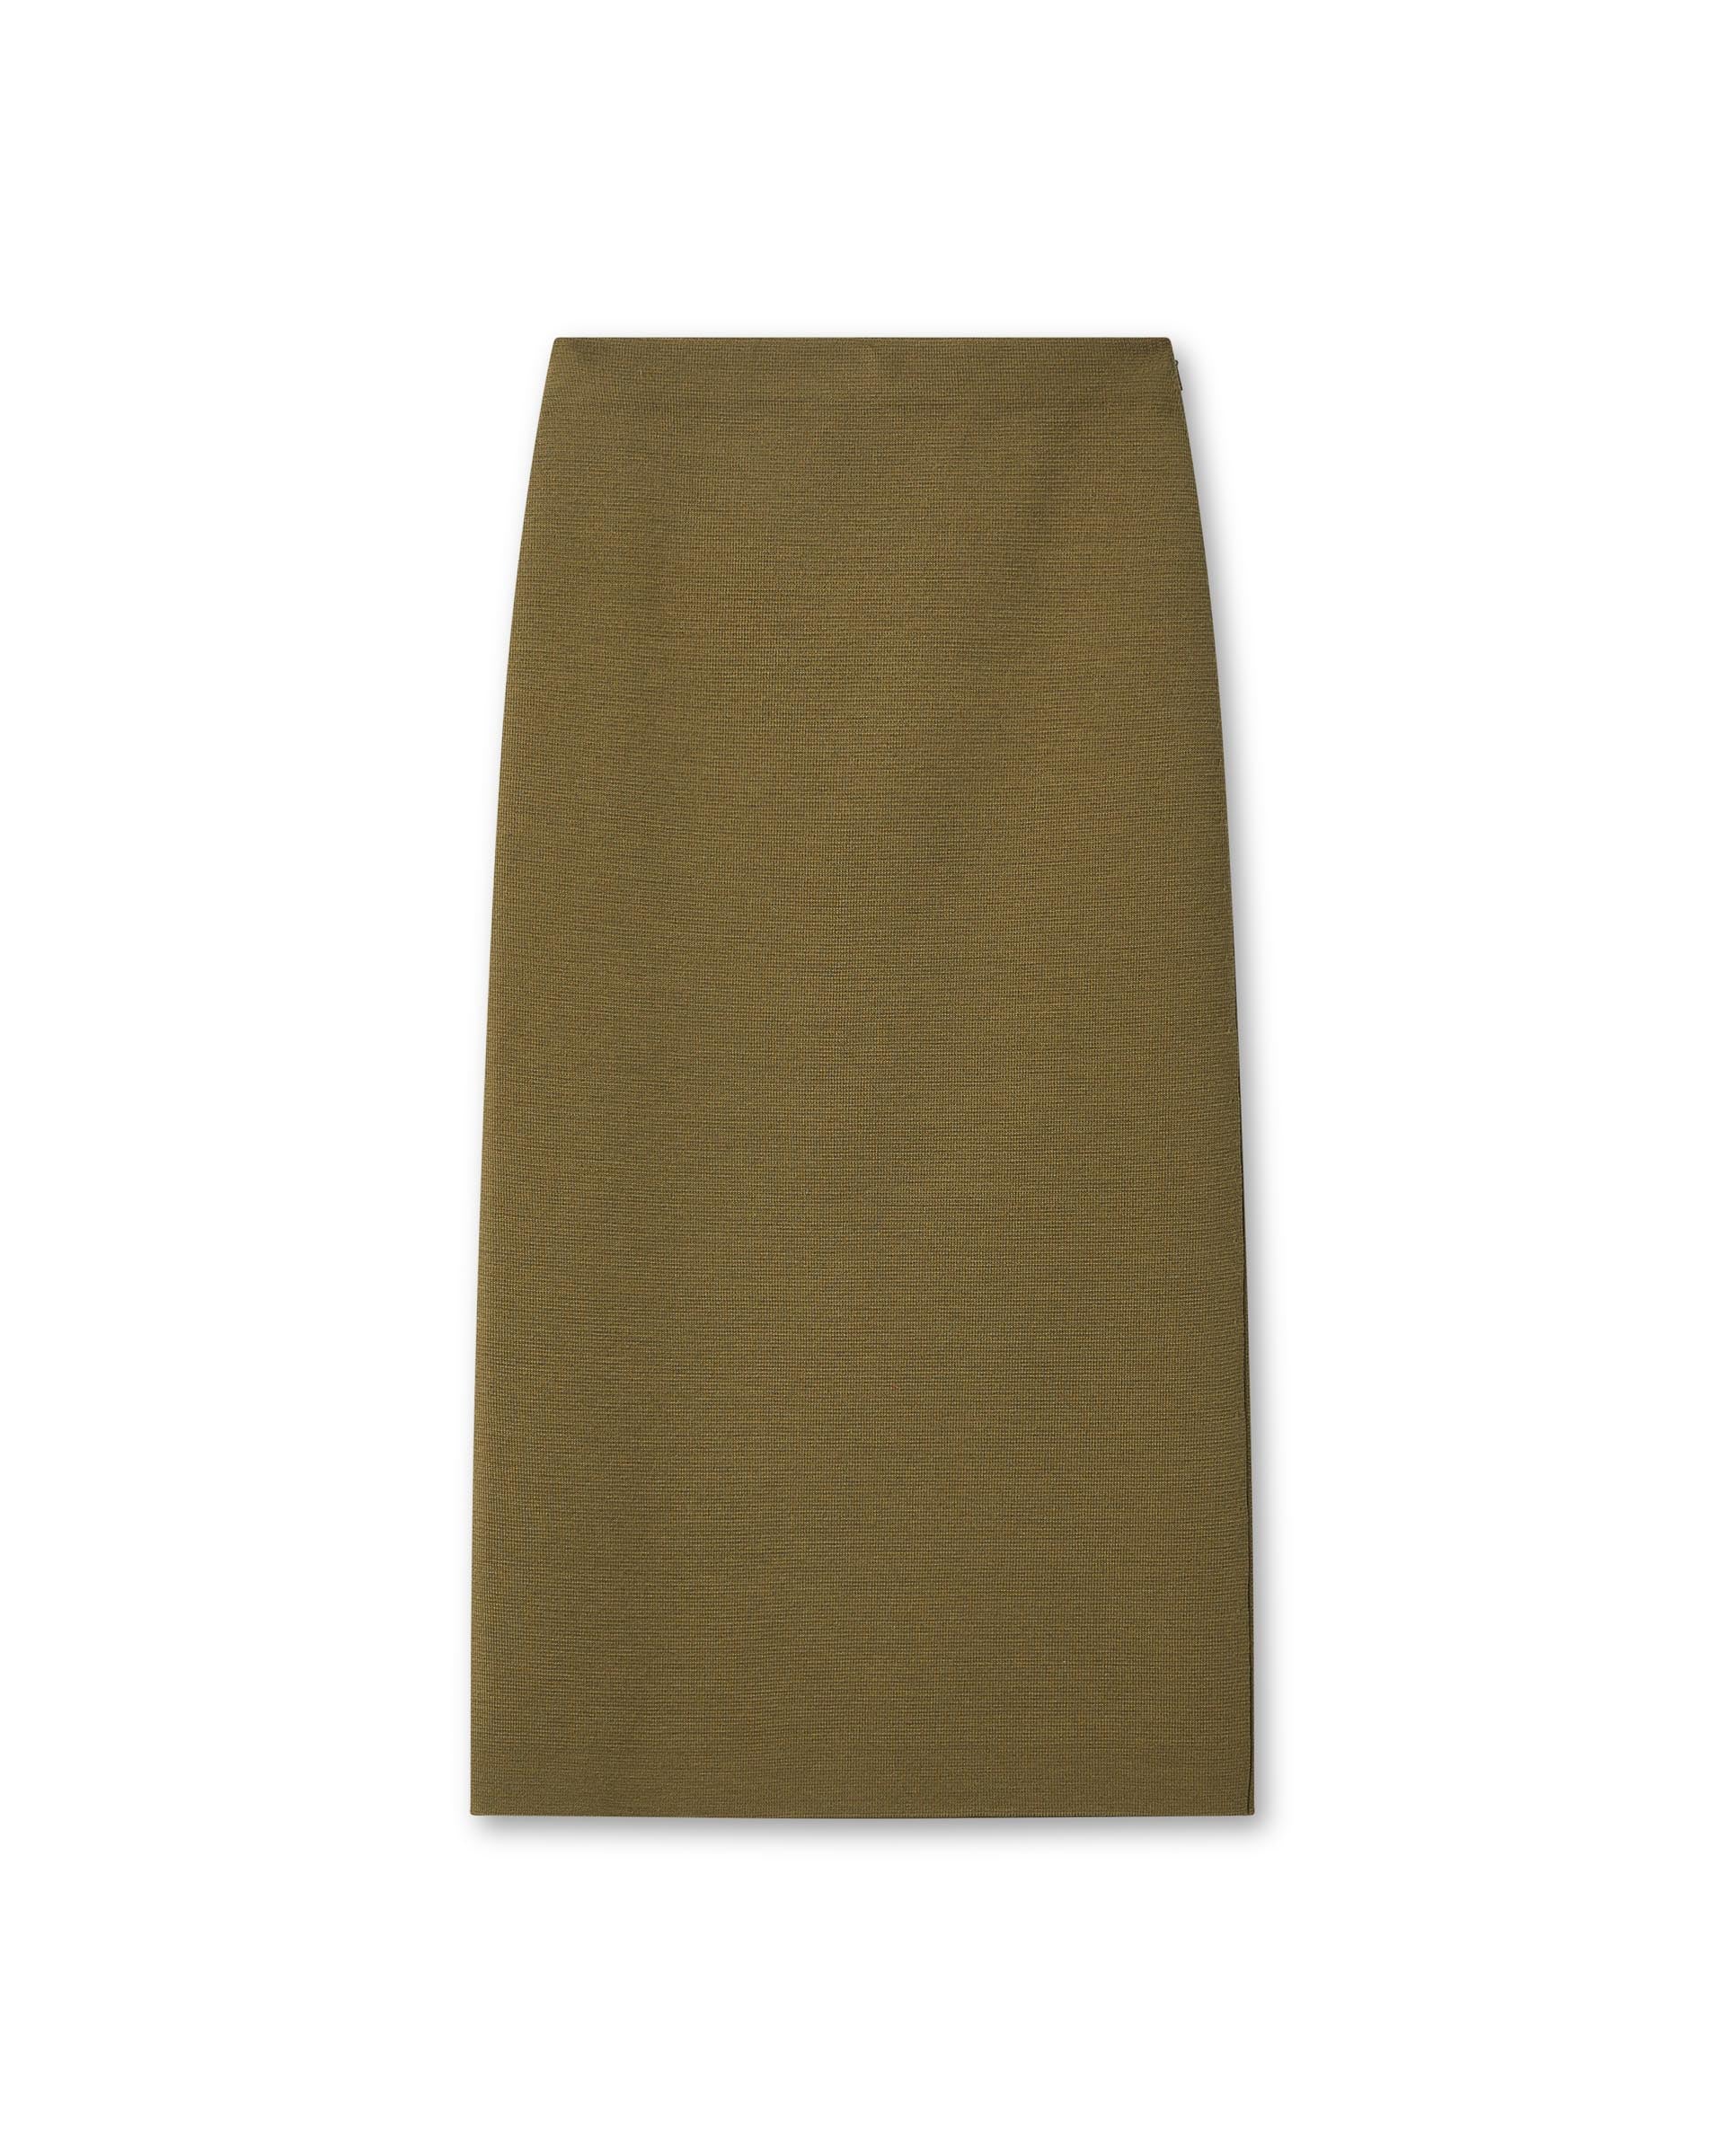 Daphne Skirt in Merino Wool, Army Green